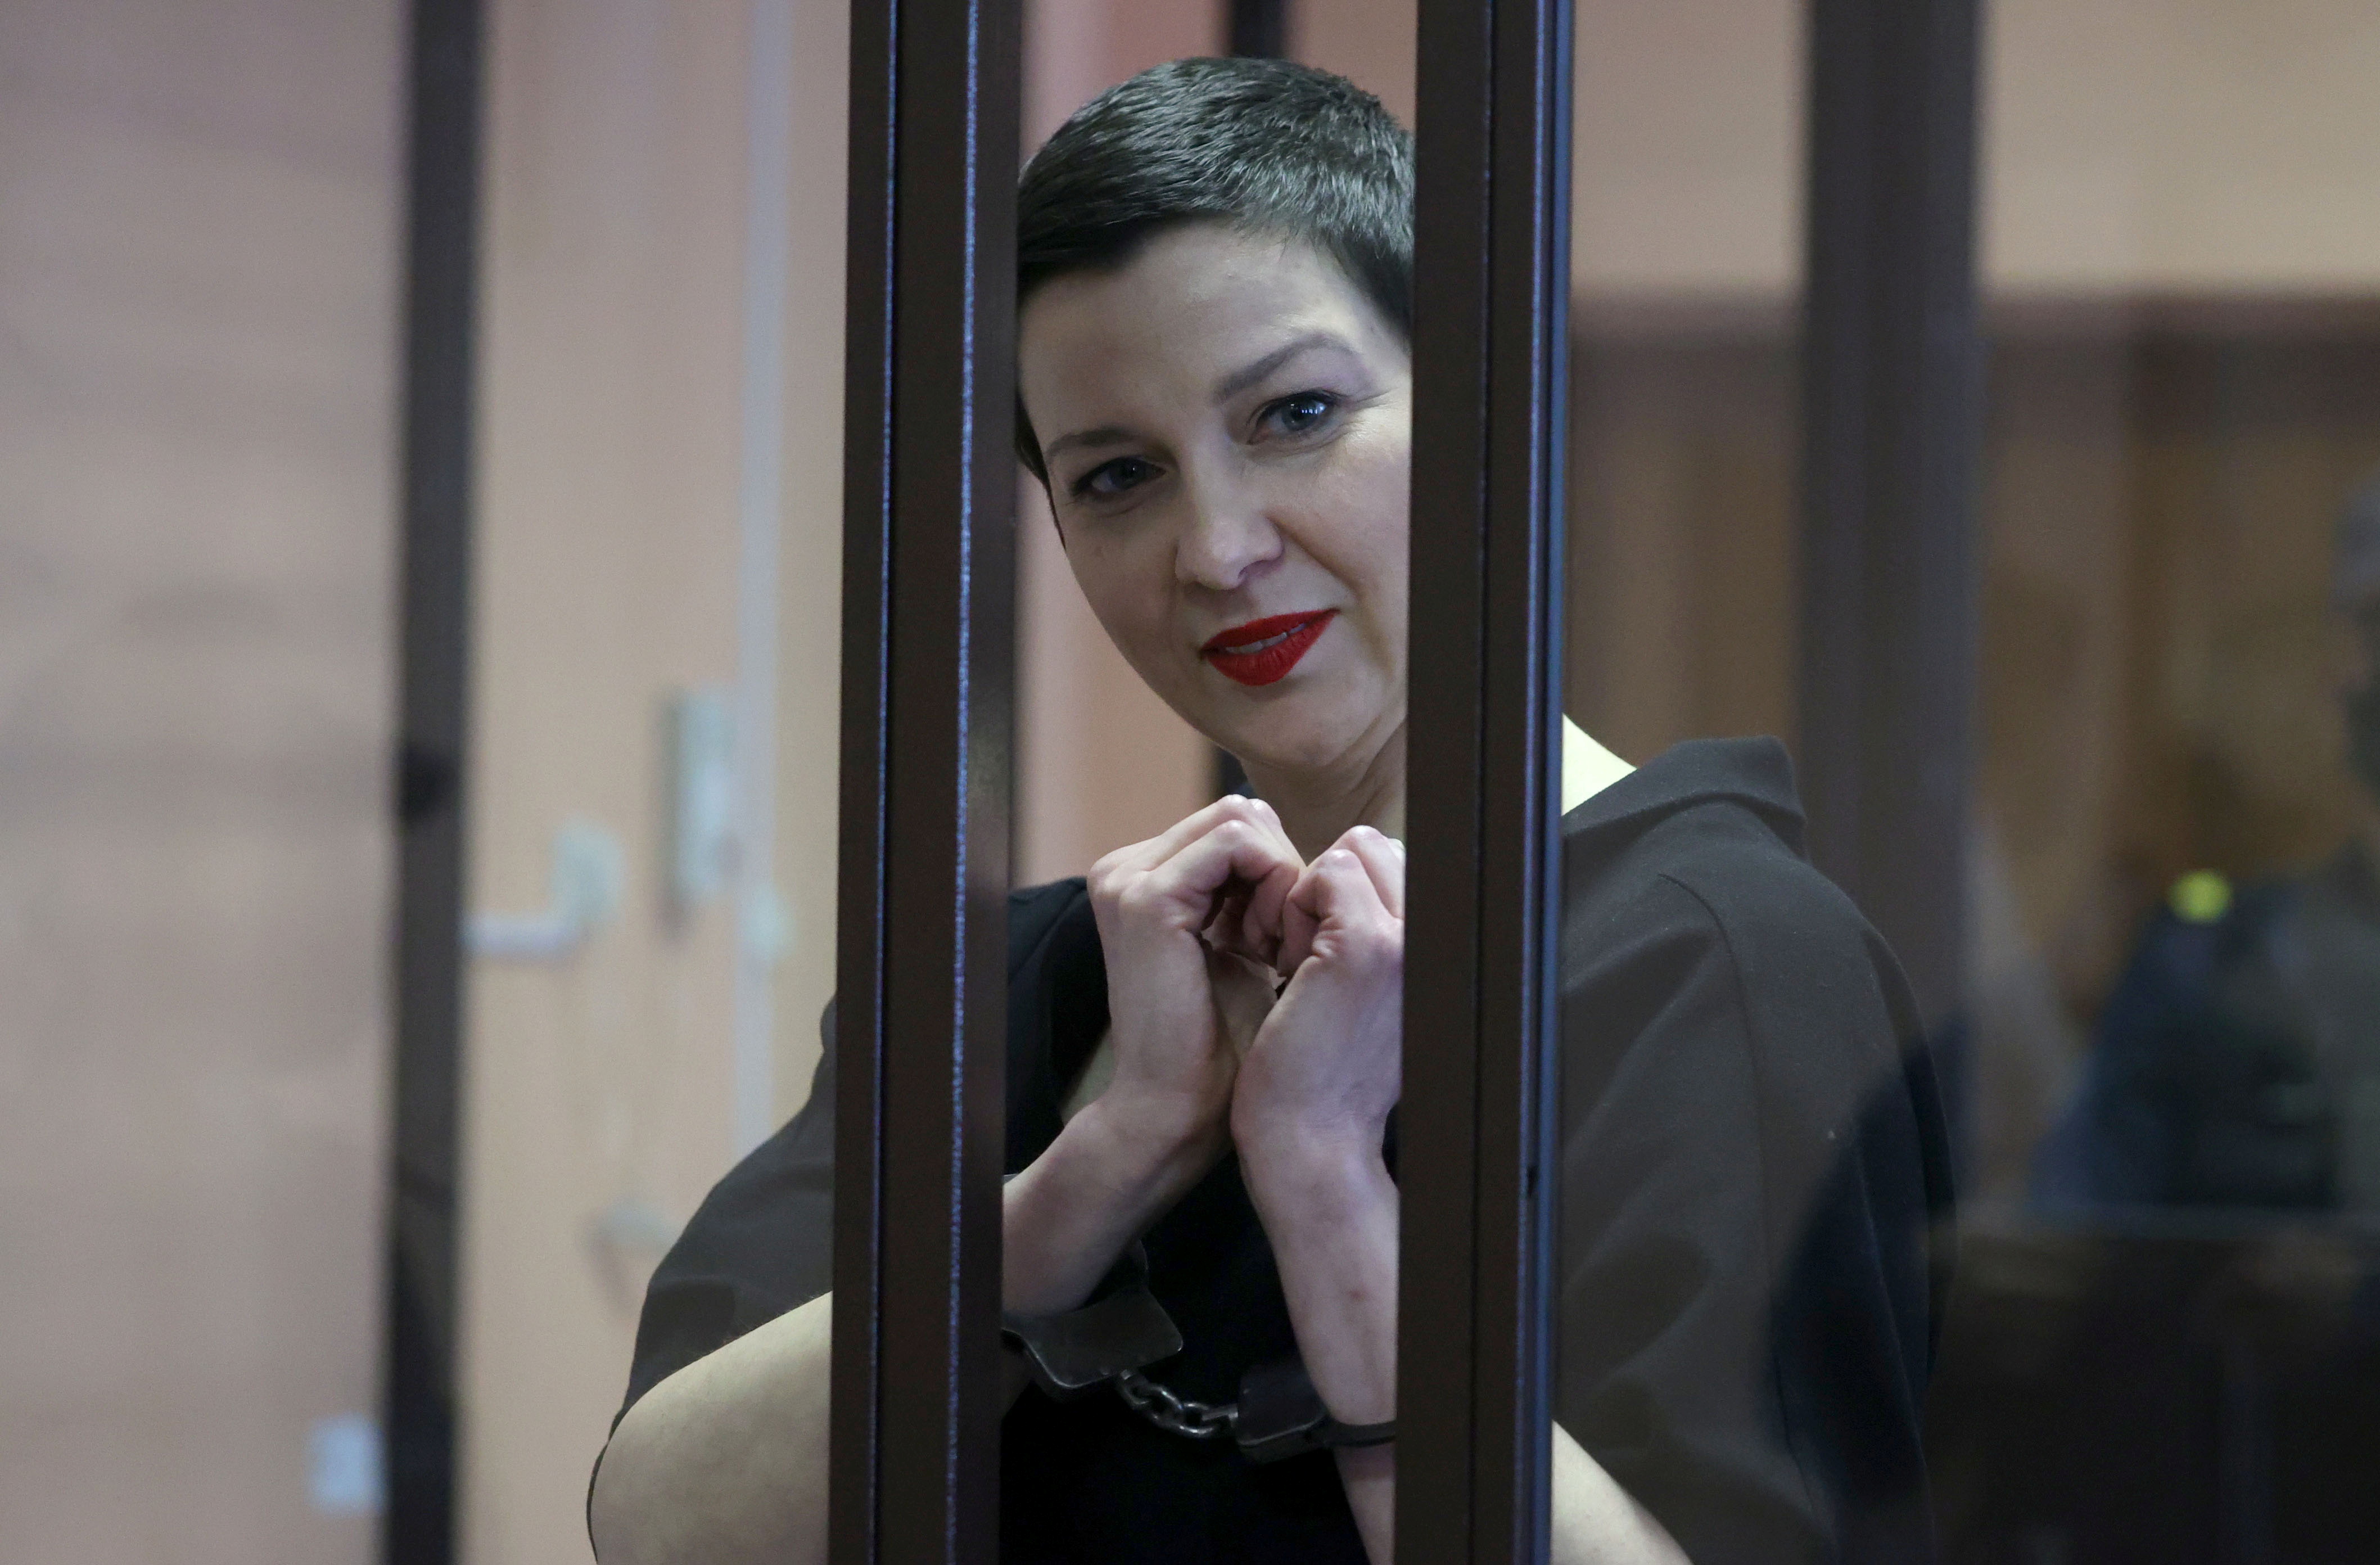 Belarusian opposition politician Maria Kolesnikova attends a court hearing in Minsk